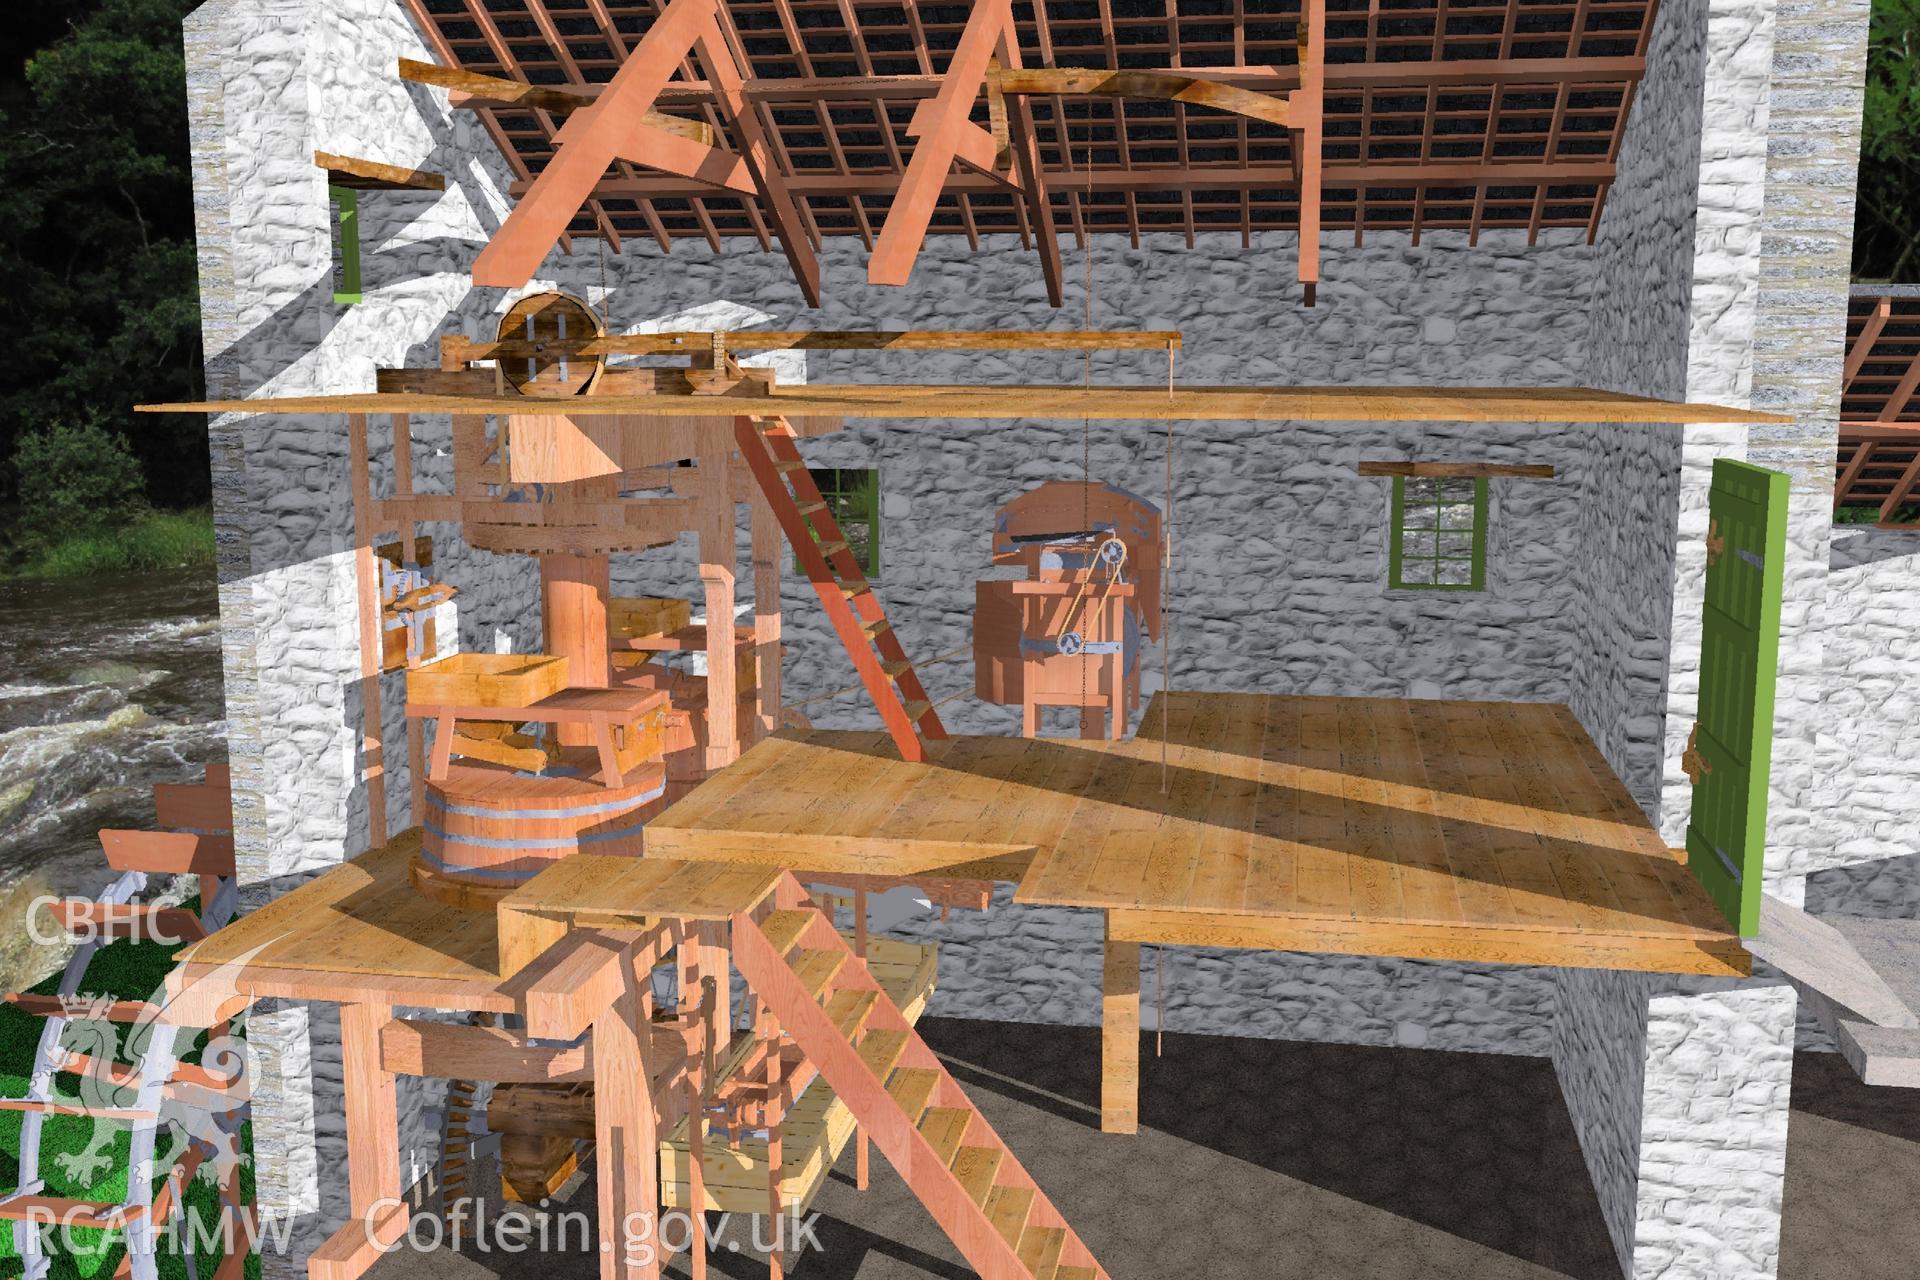 Digital 3D drawing relating to Cenarth mill.